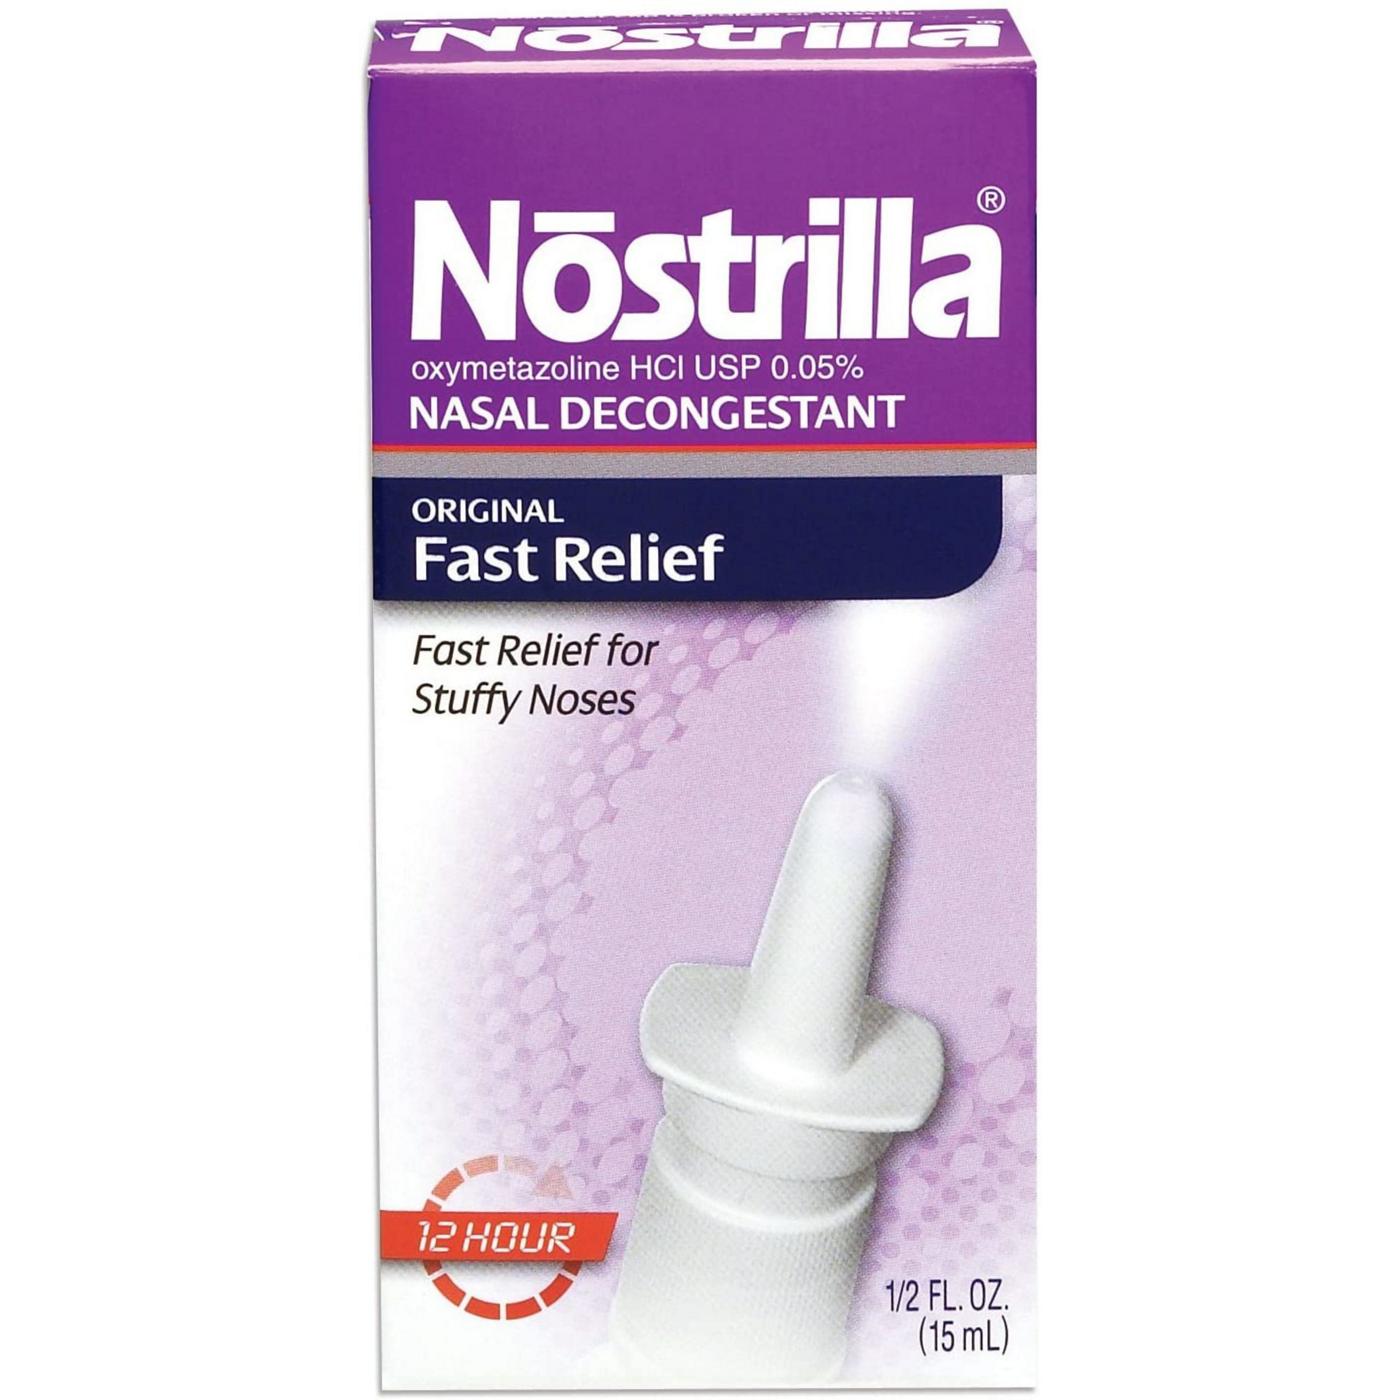 Nostrilla Fast Relief Nasal Decongestant Spray; image 1 of 5